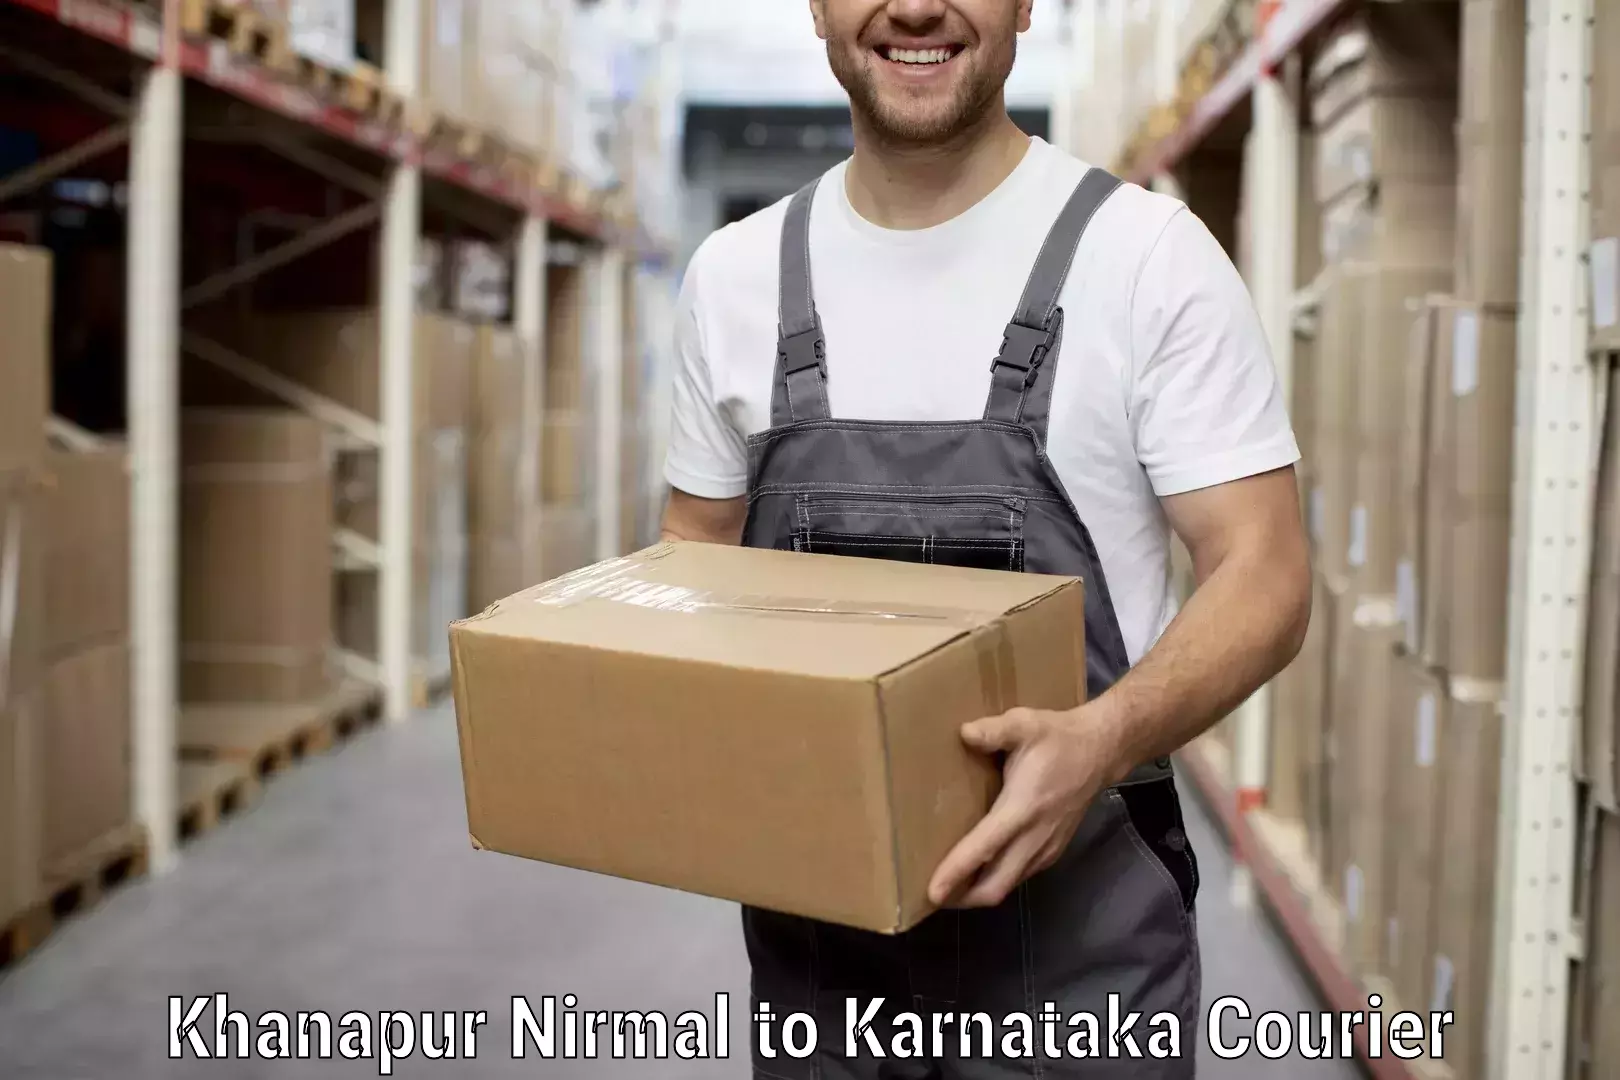 Furniture moving experts in Khanapur Nirmal to Karnataka